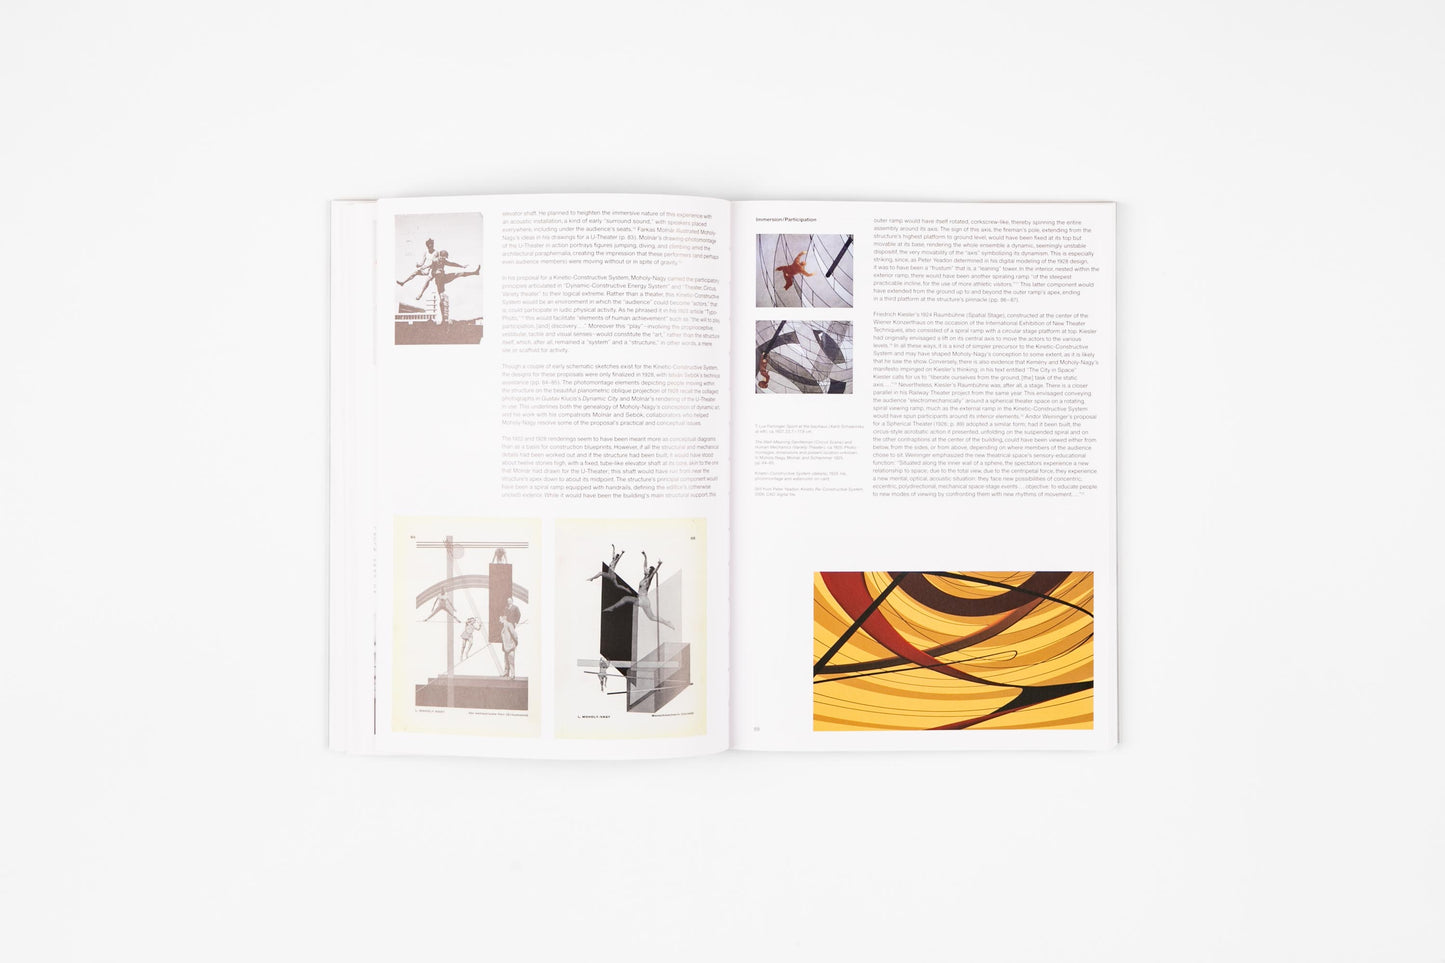 Sensing the Future: Moholy-Nagy, Media and the Arts